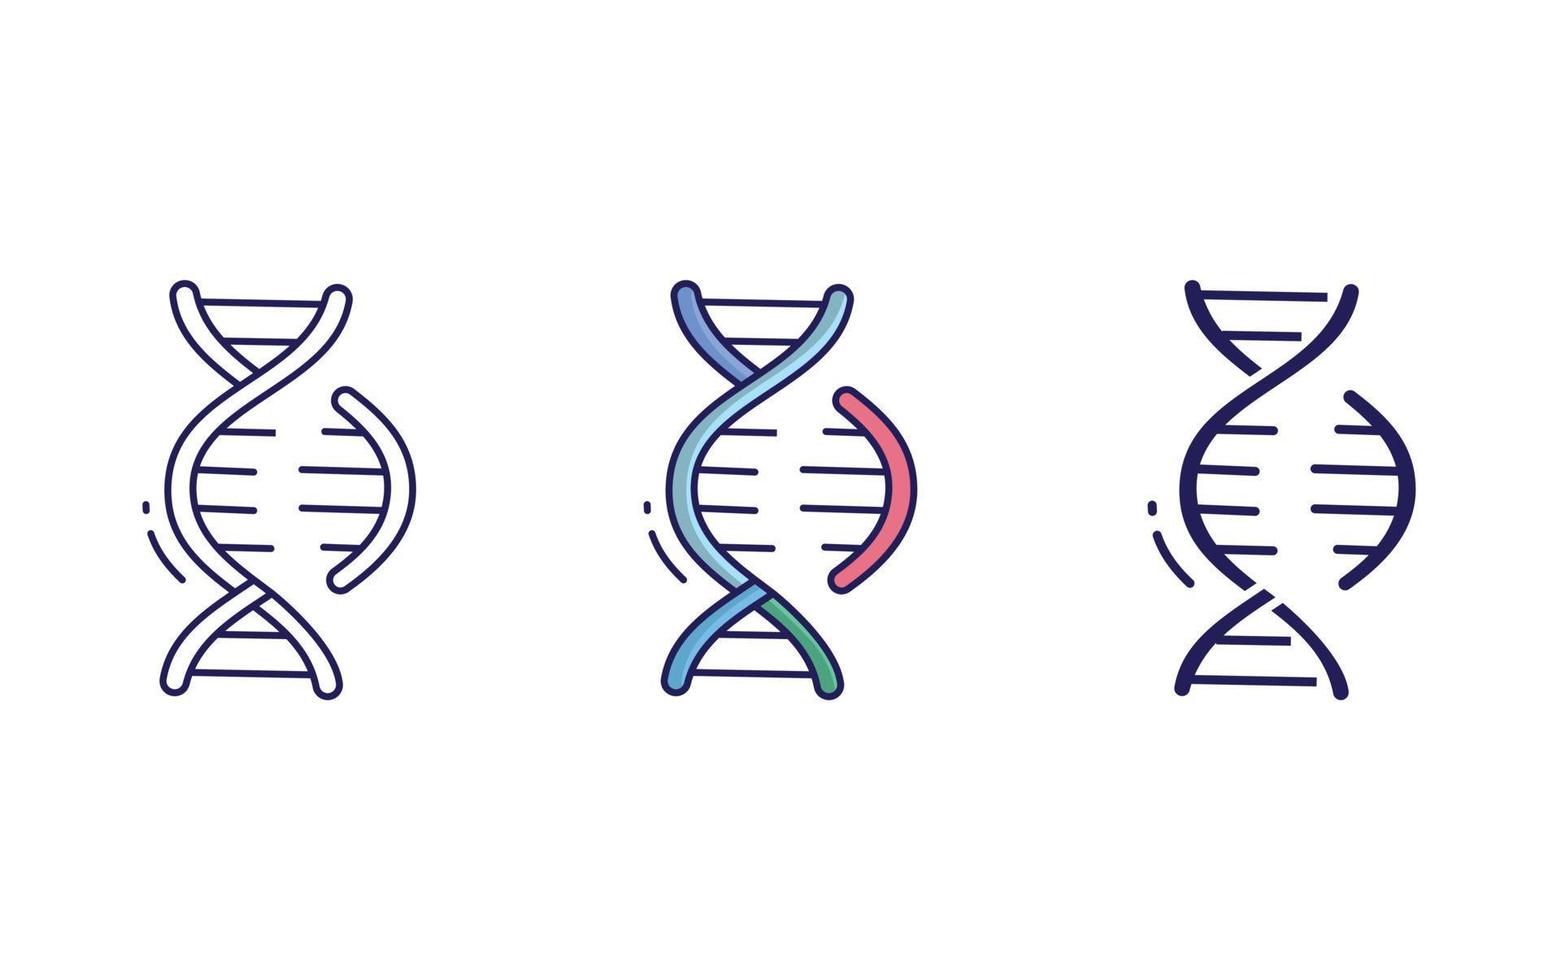 DNA divide icon vector